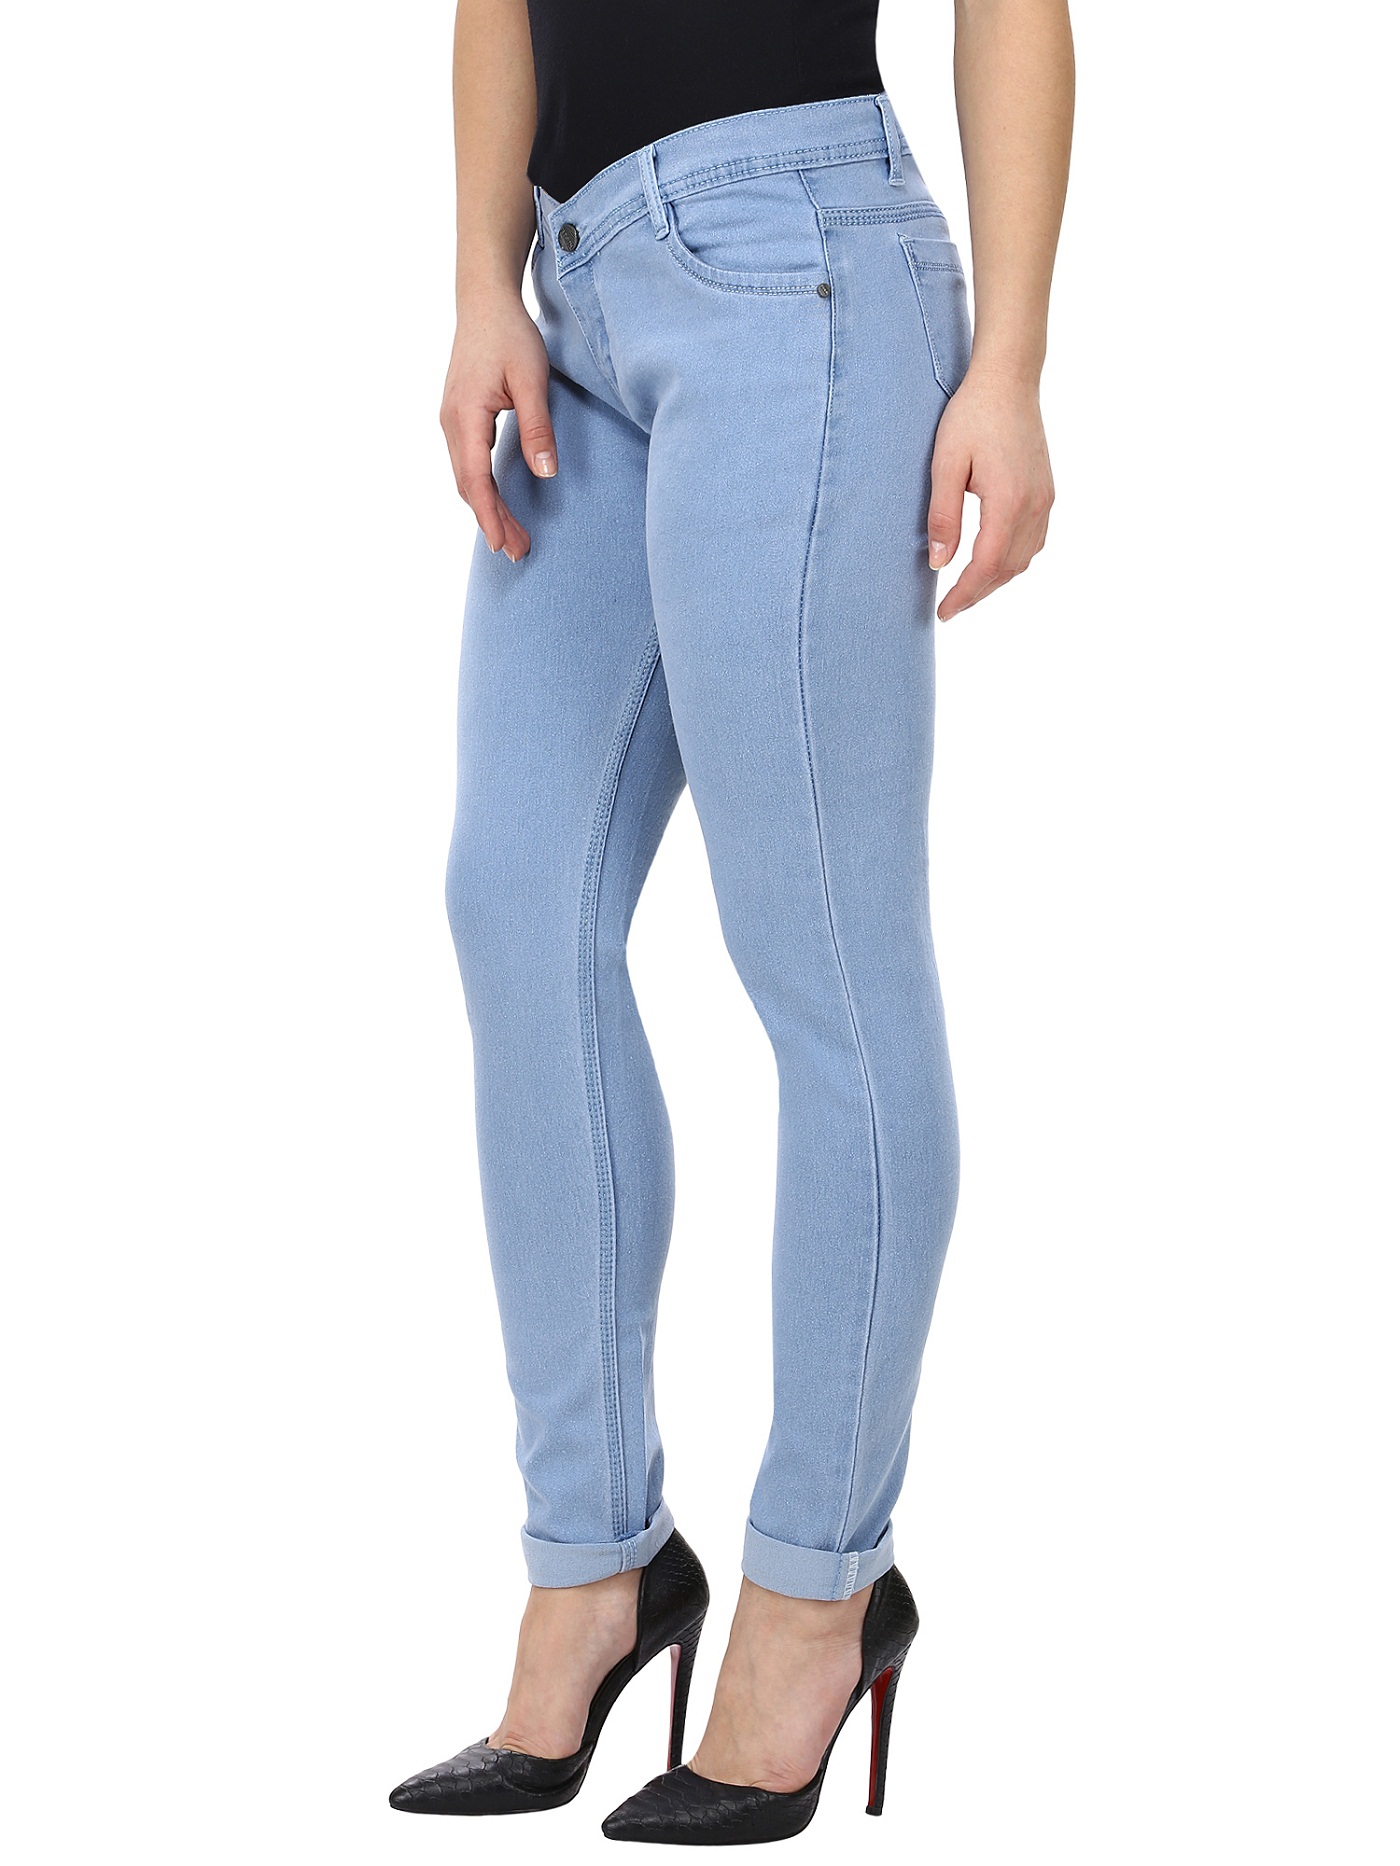 Buy NJs Slim Women Ice Blue Jeans Online @ ₹449 from ShopClues